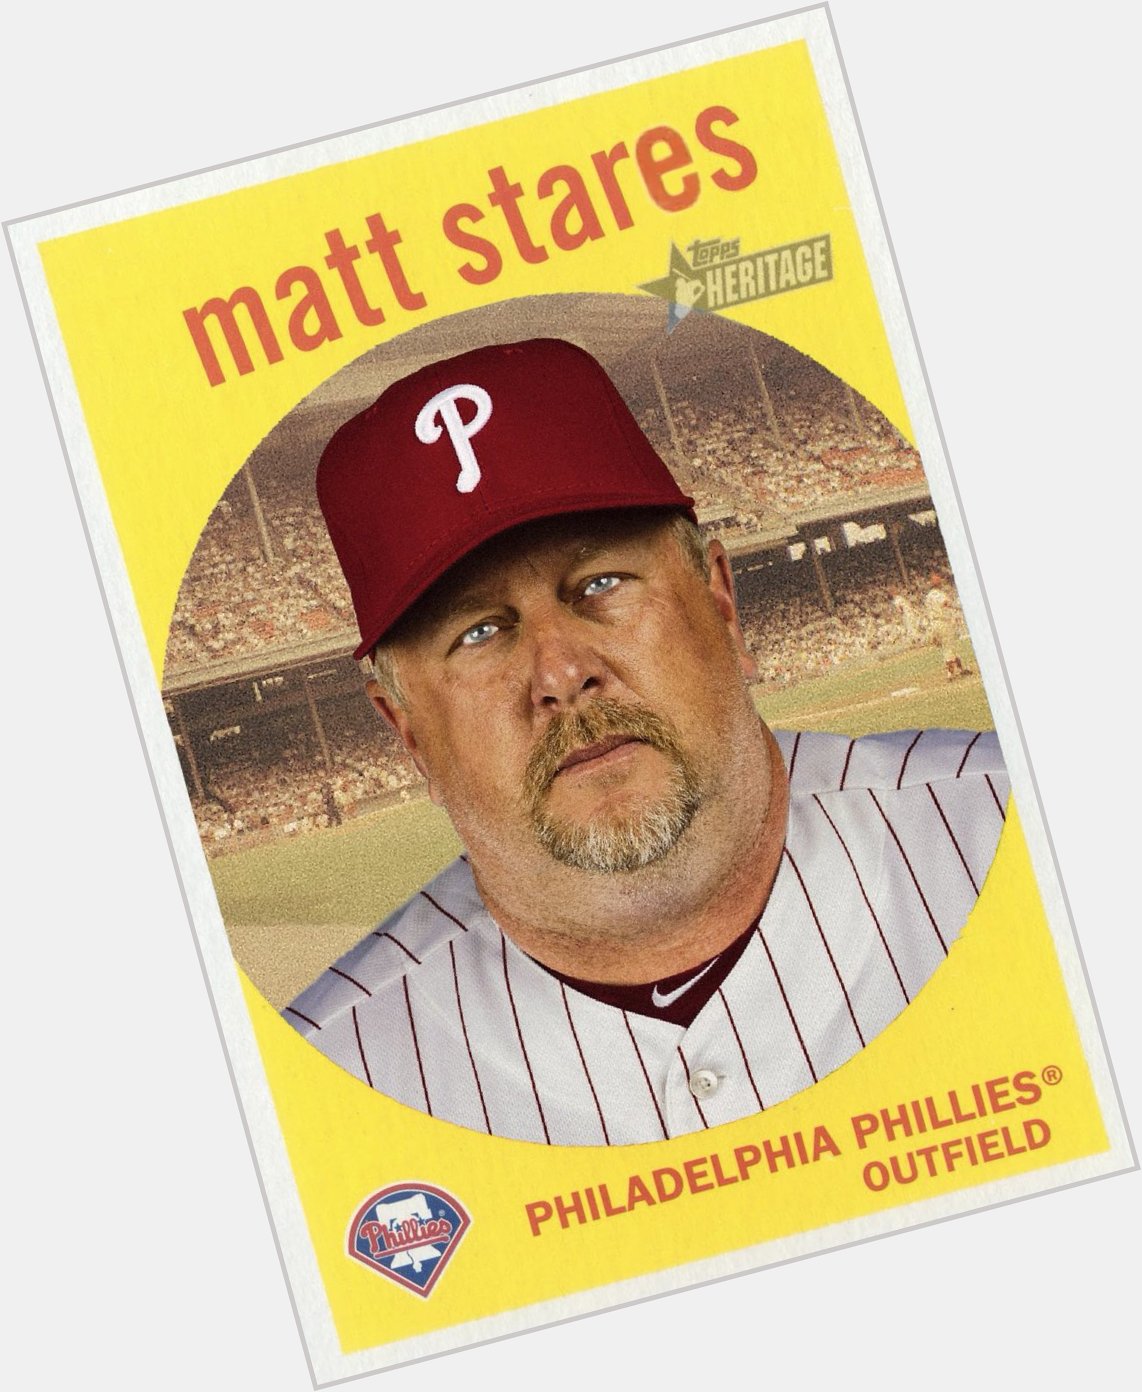 Happy birthday legend Matt Stairs!

He s looking through you. 